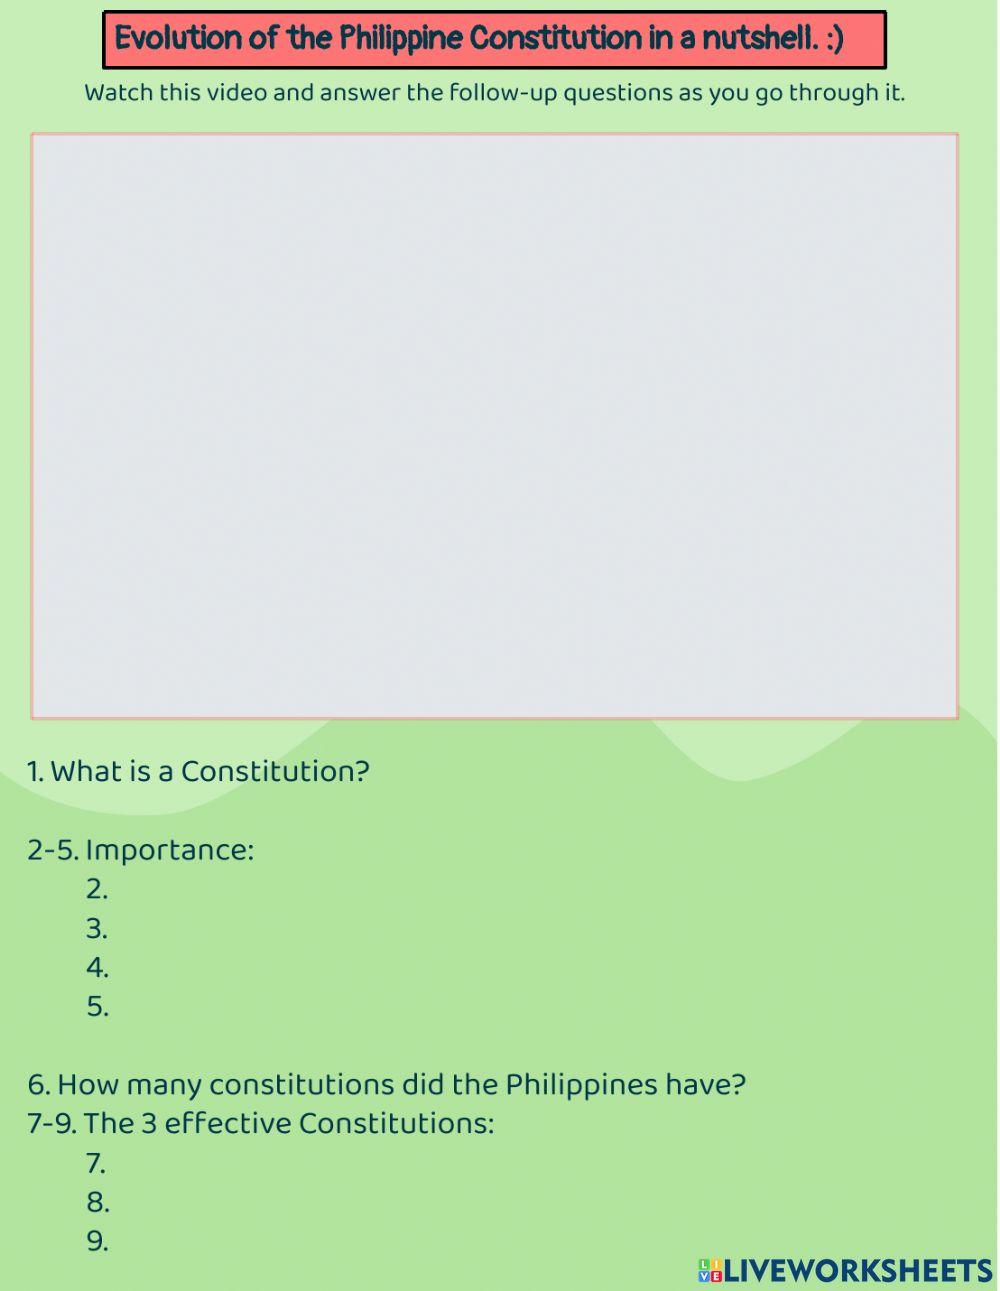 Evolution of the Philippine Constitution